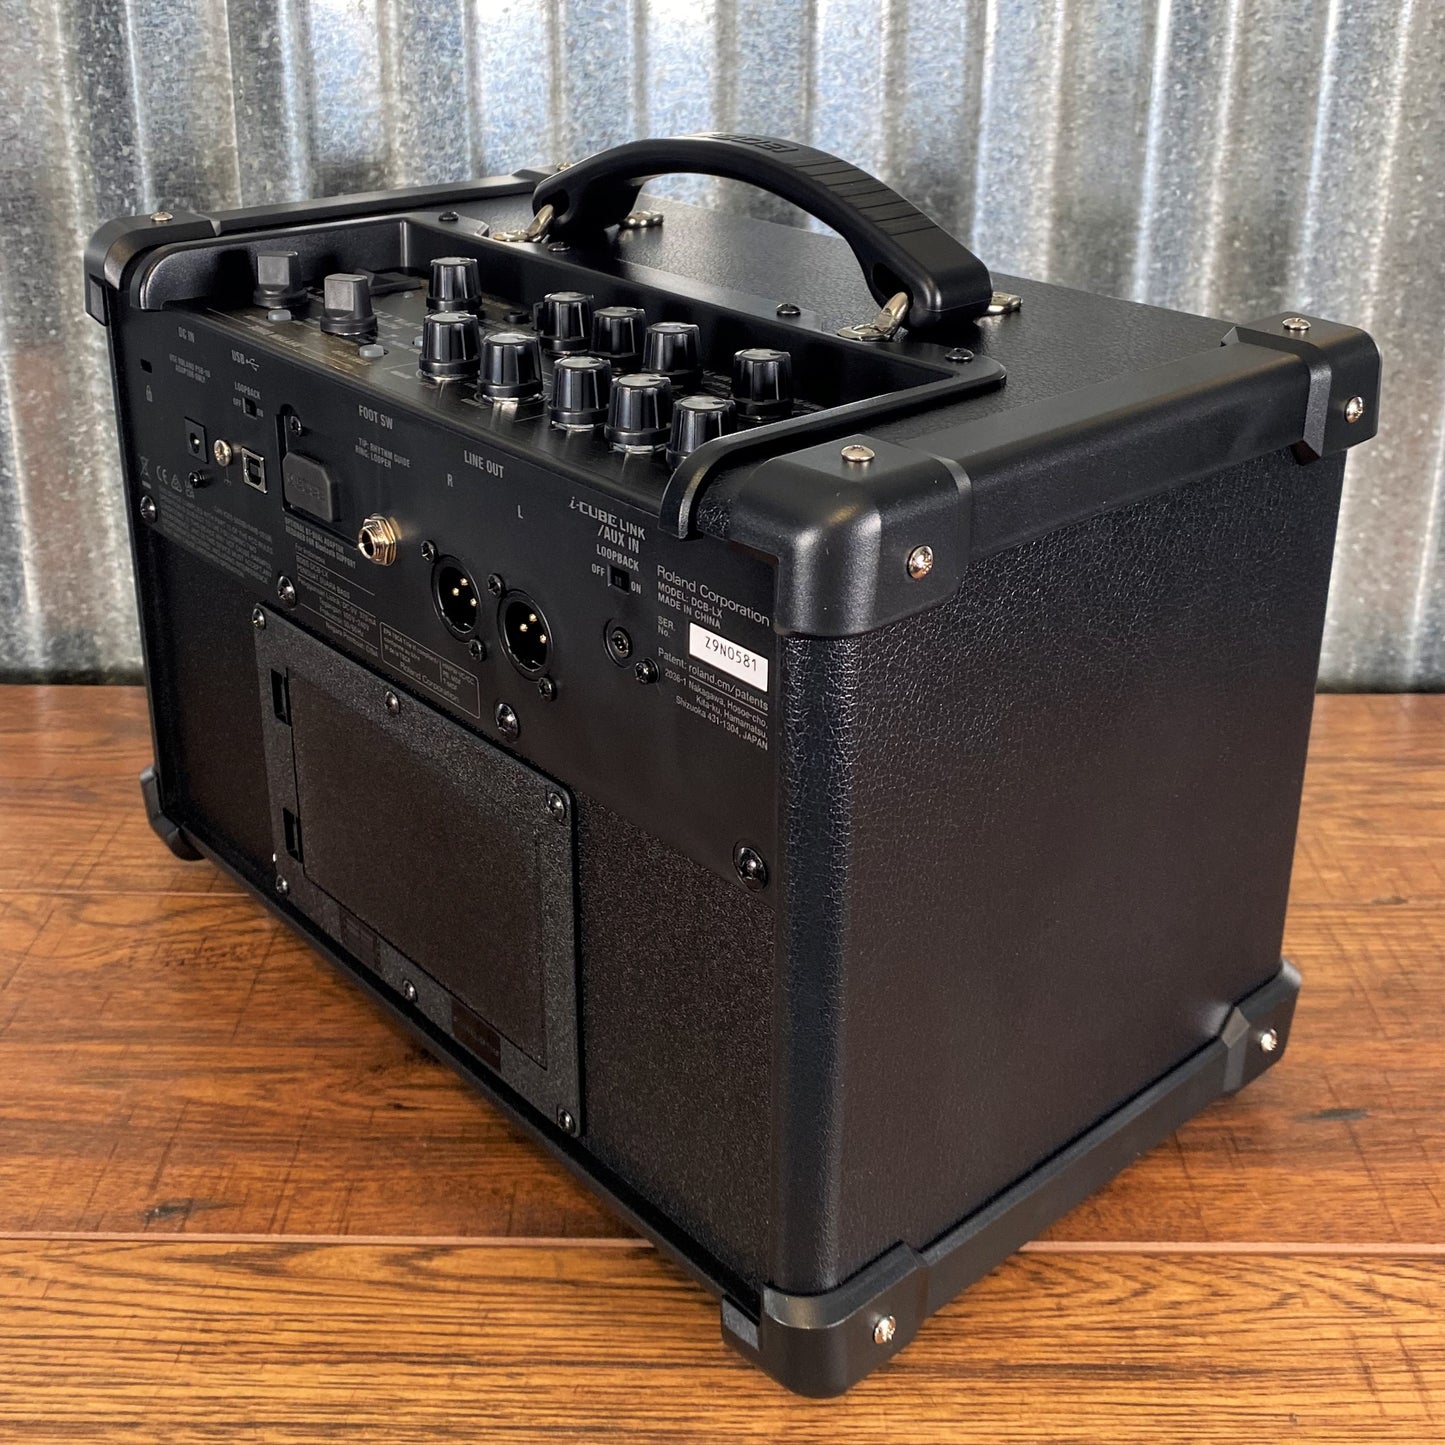 Boss Dual Cube Bass LX 2x5" 10 Watt Stereo Amplifier Combo DCB-LX